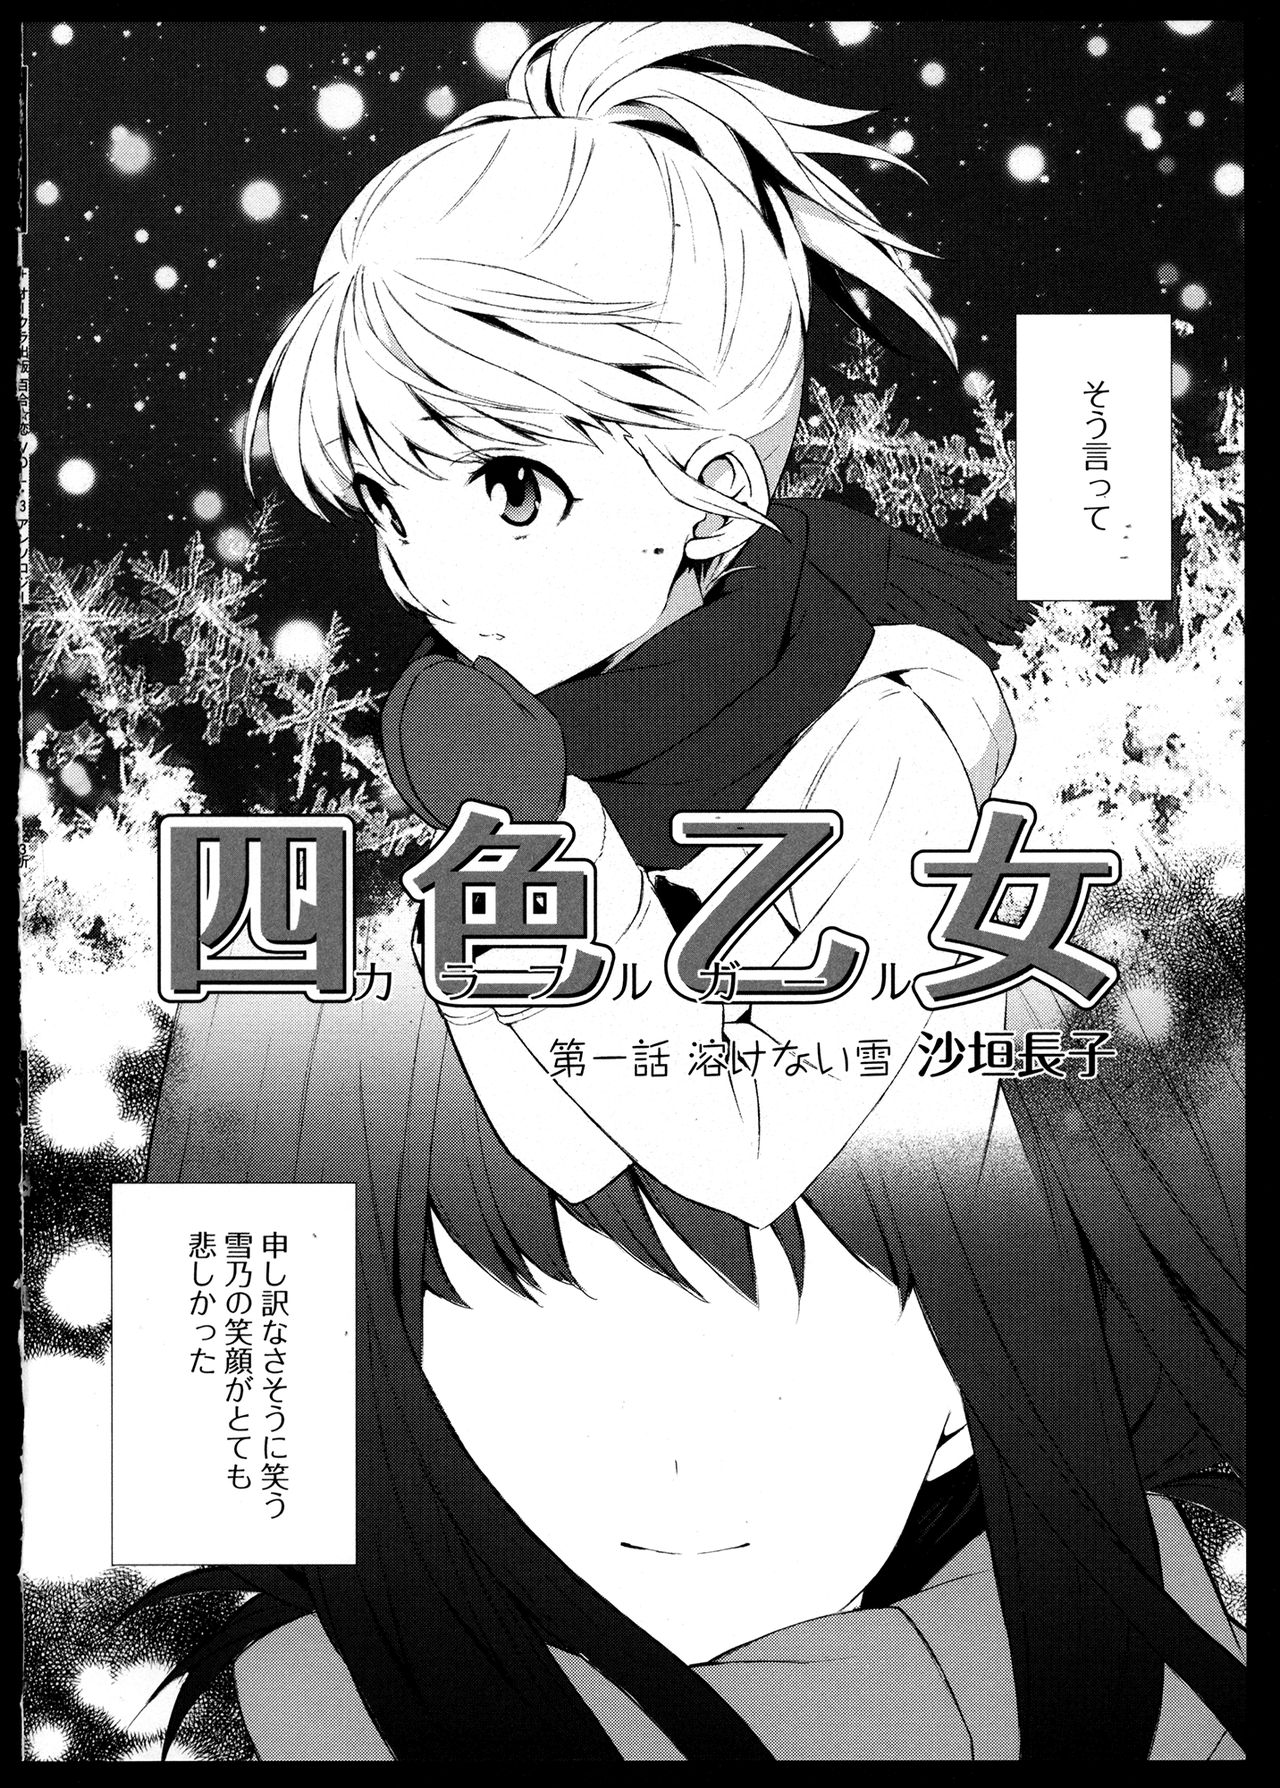 [Anthology]Yuri Koi Volume 3 [アンソロジー] 百合恋VOL.3 (OKS COMIX百合シリーズ)